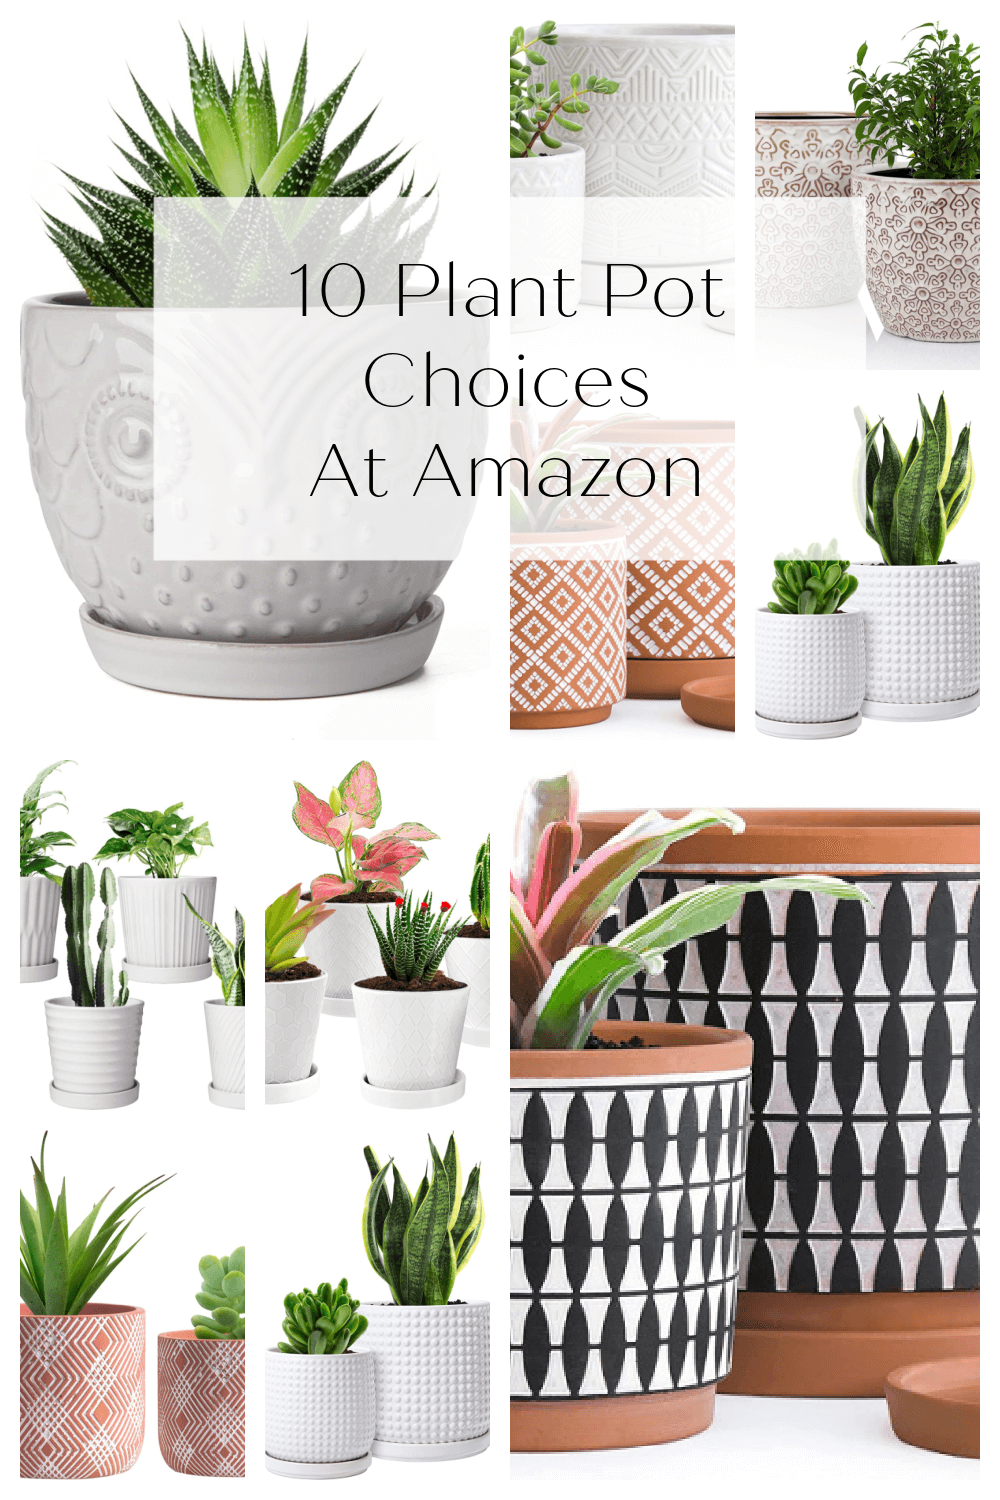 10 Plant Pot Choices At Amazon